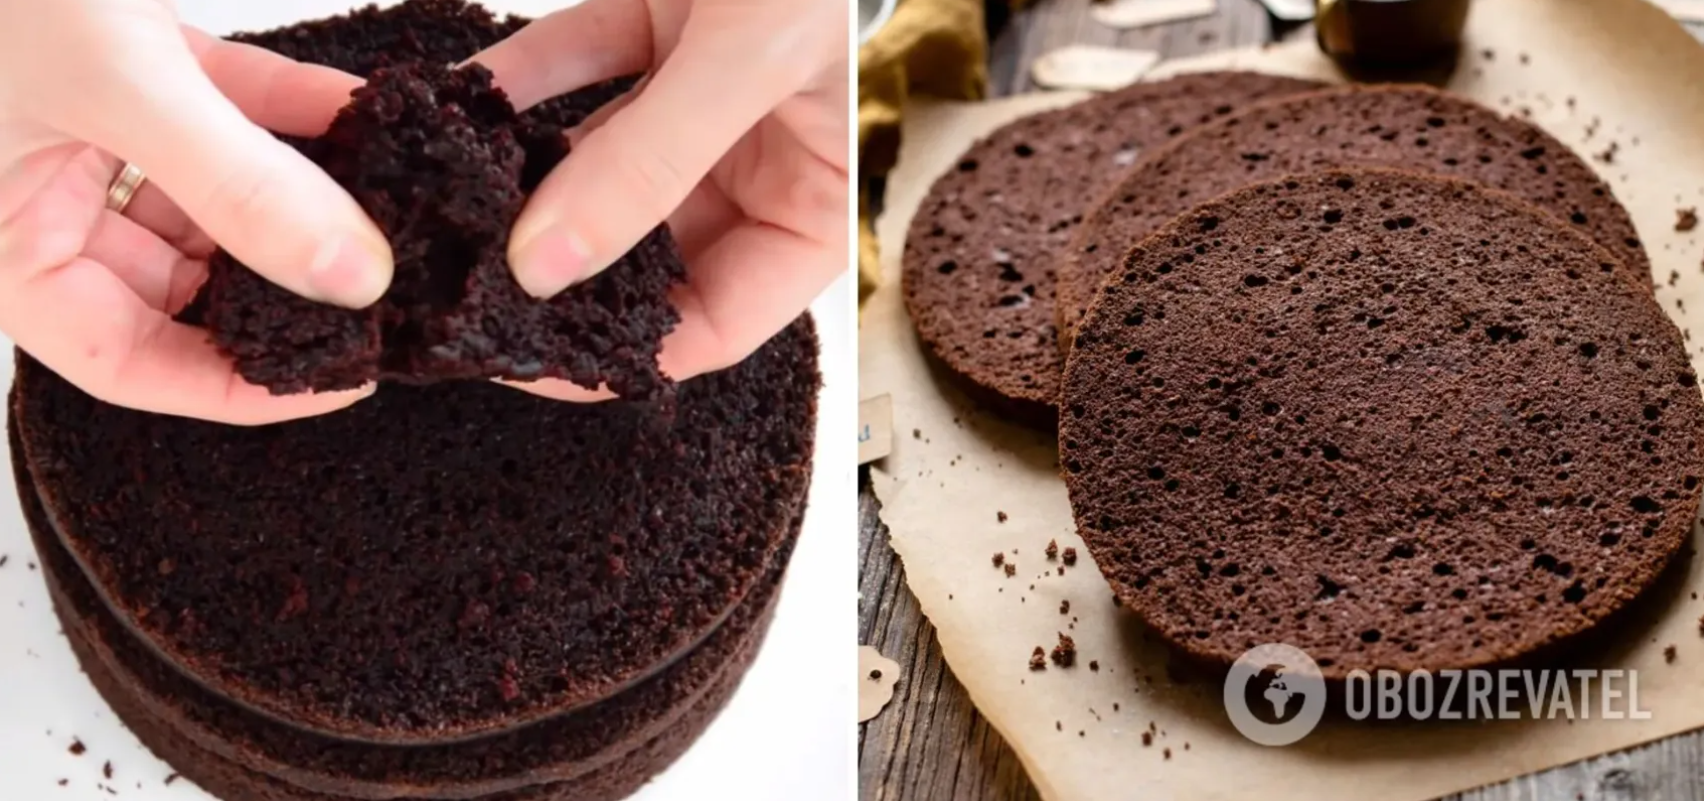 A simple recipe for chocolate sponge cake